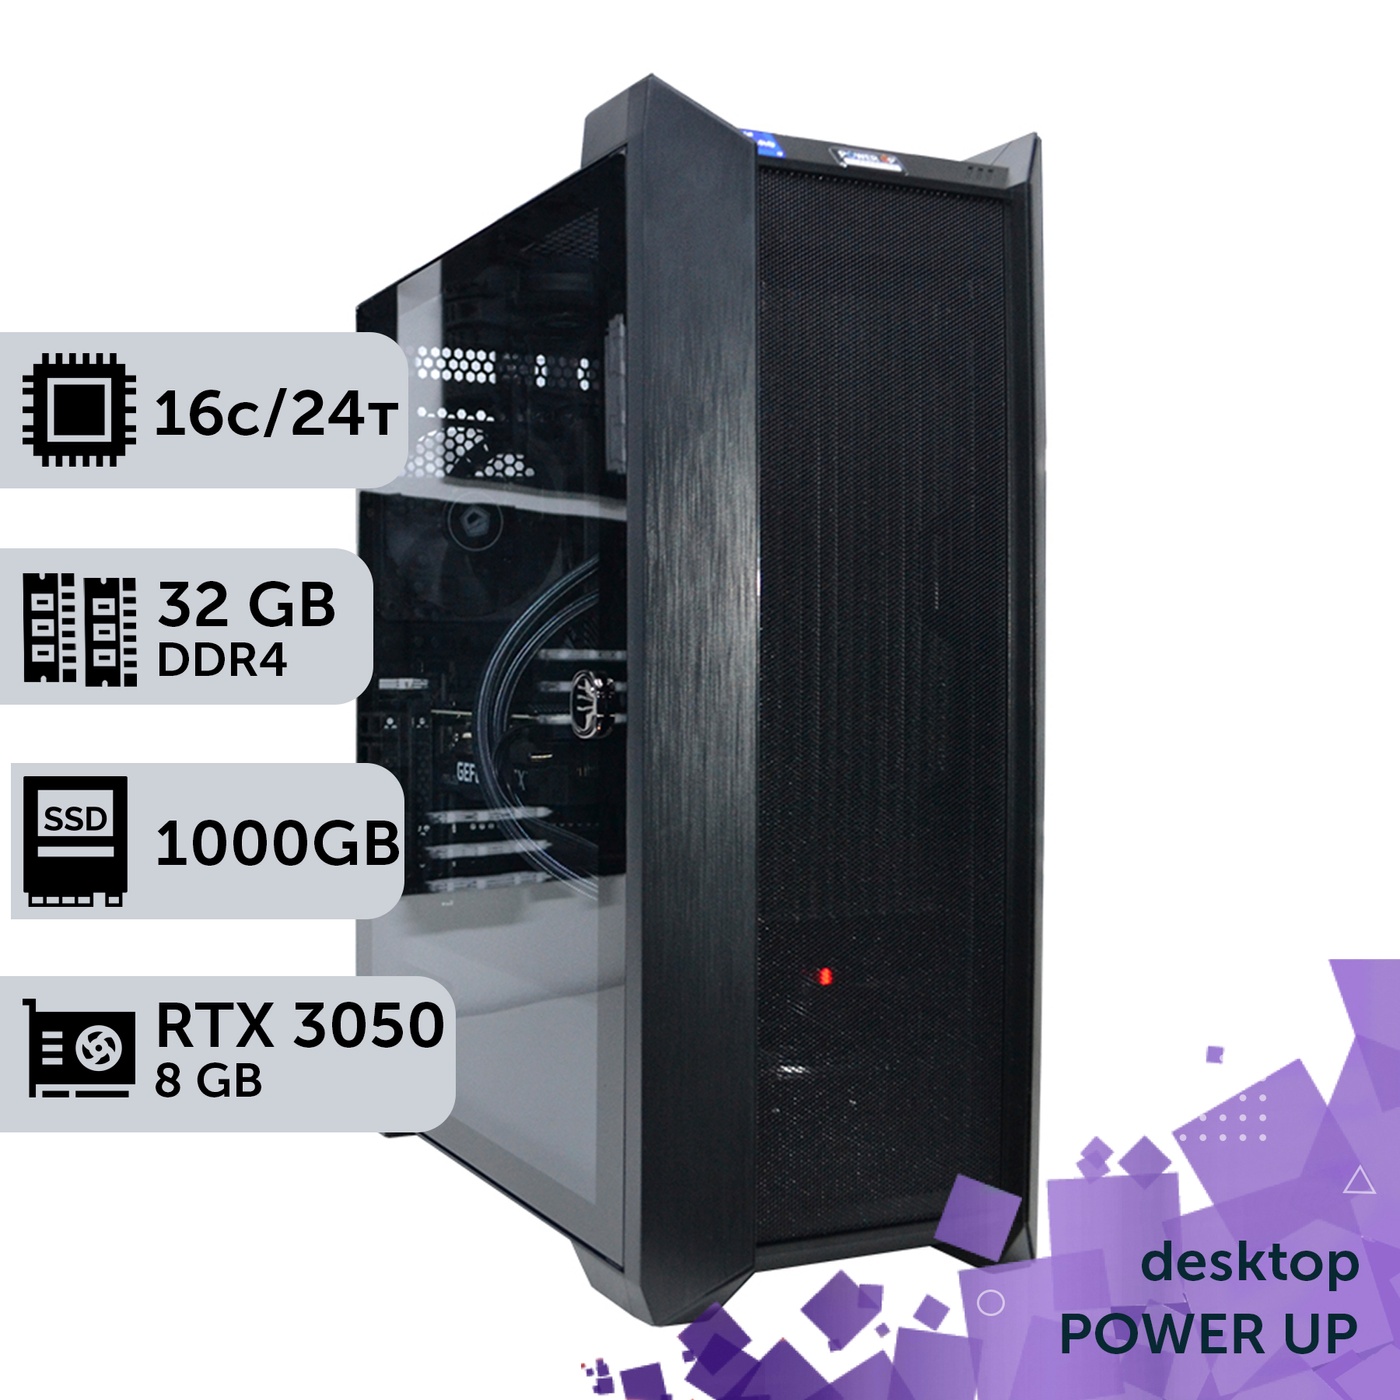 Рабочая станция PowerUp Desktop #219 Core i7 13700K/32 GB/SSD 1TB/GeForce RTX 3050 8GB